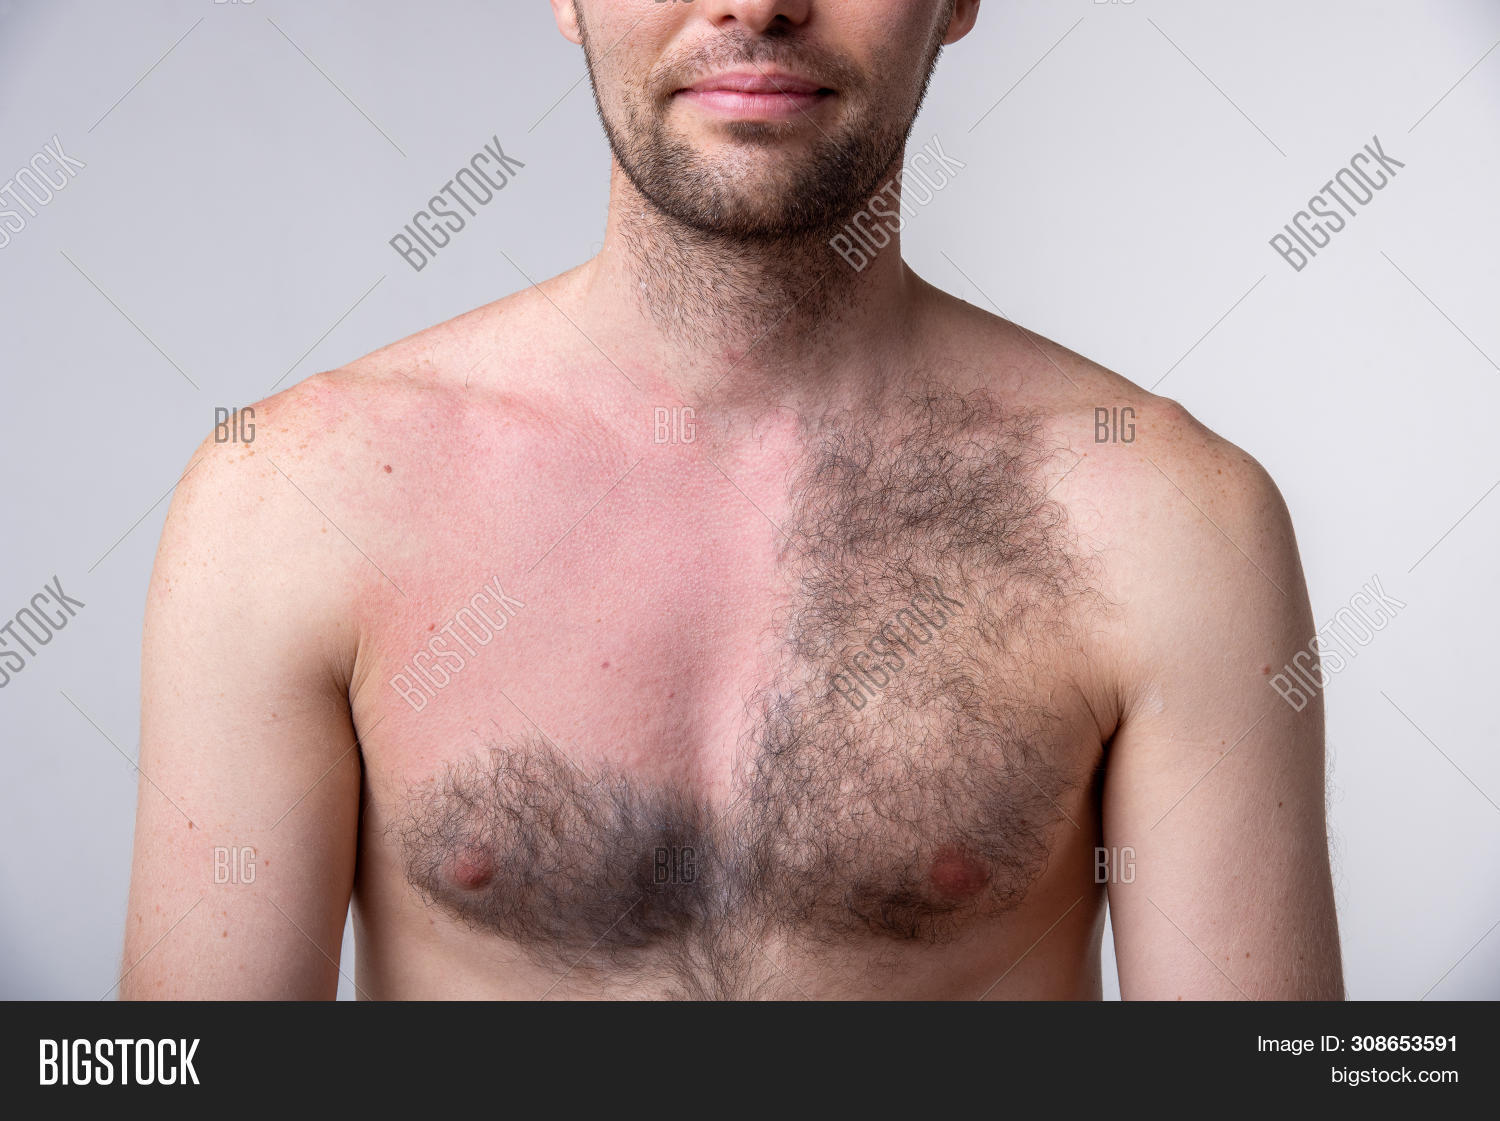 corey pettis recommends black man chest hair pic